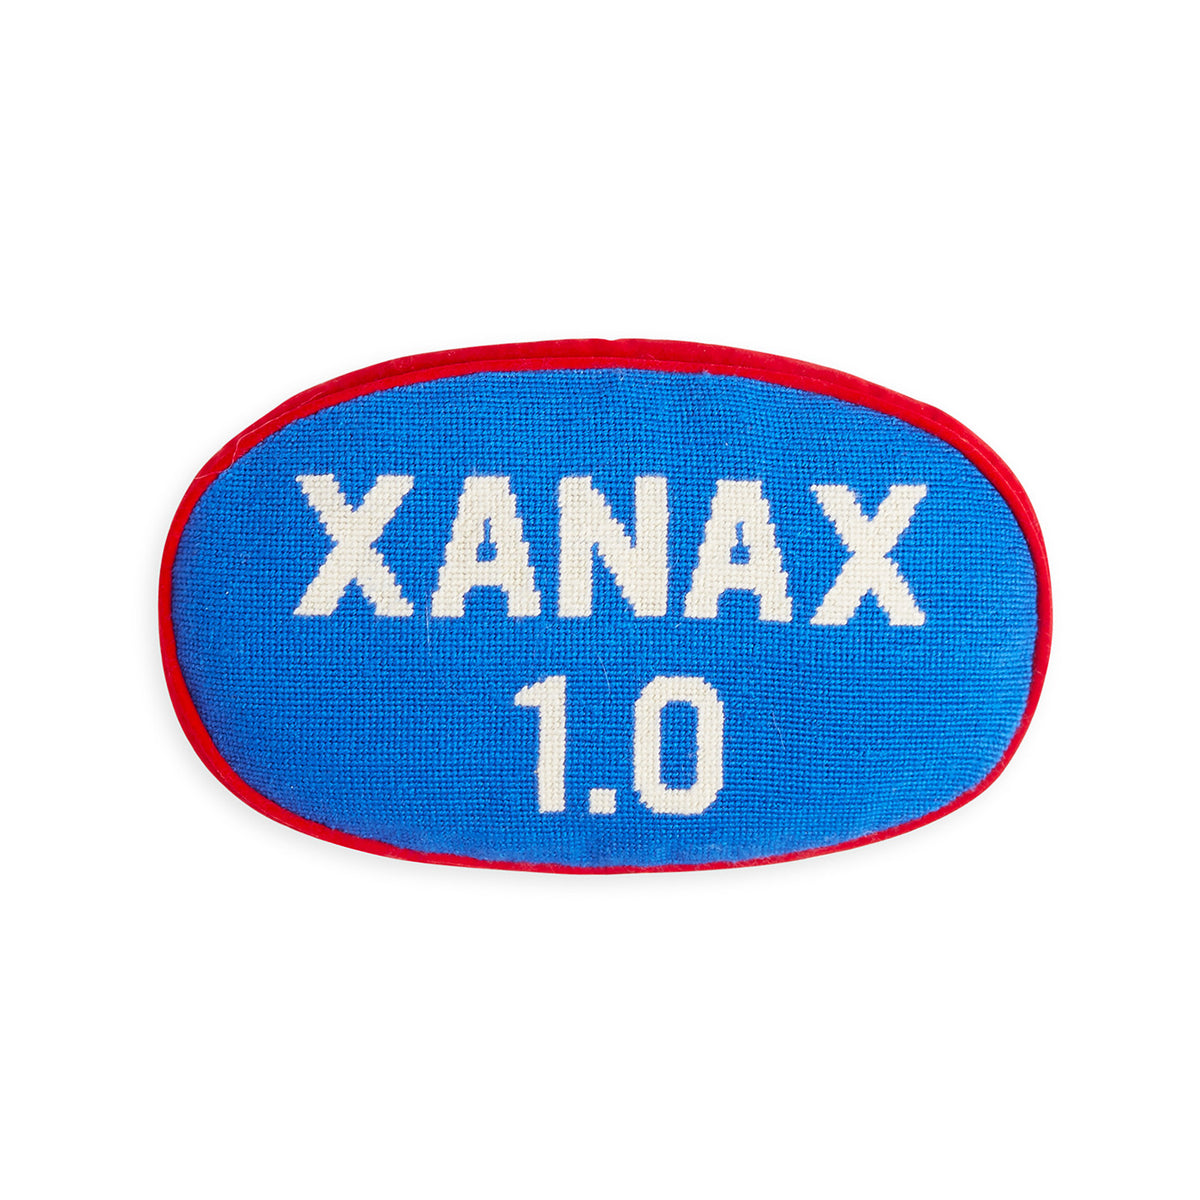 Prescription Xanax Throw Pillow by Jonathan Adler